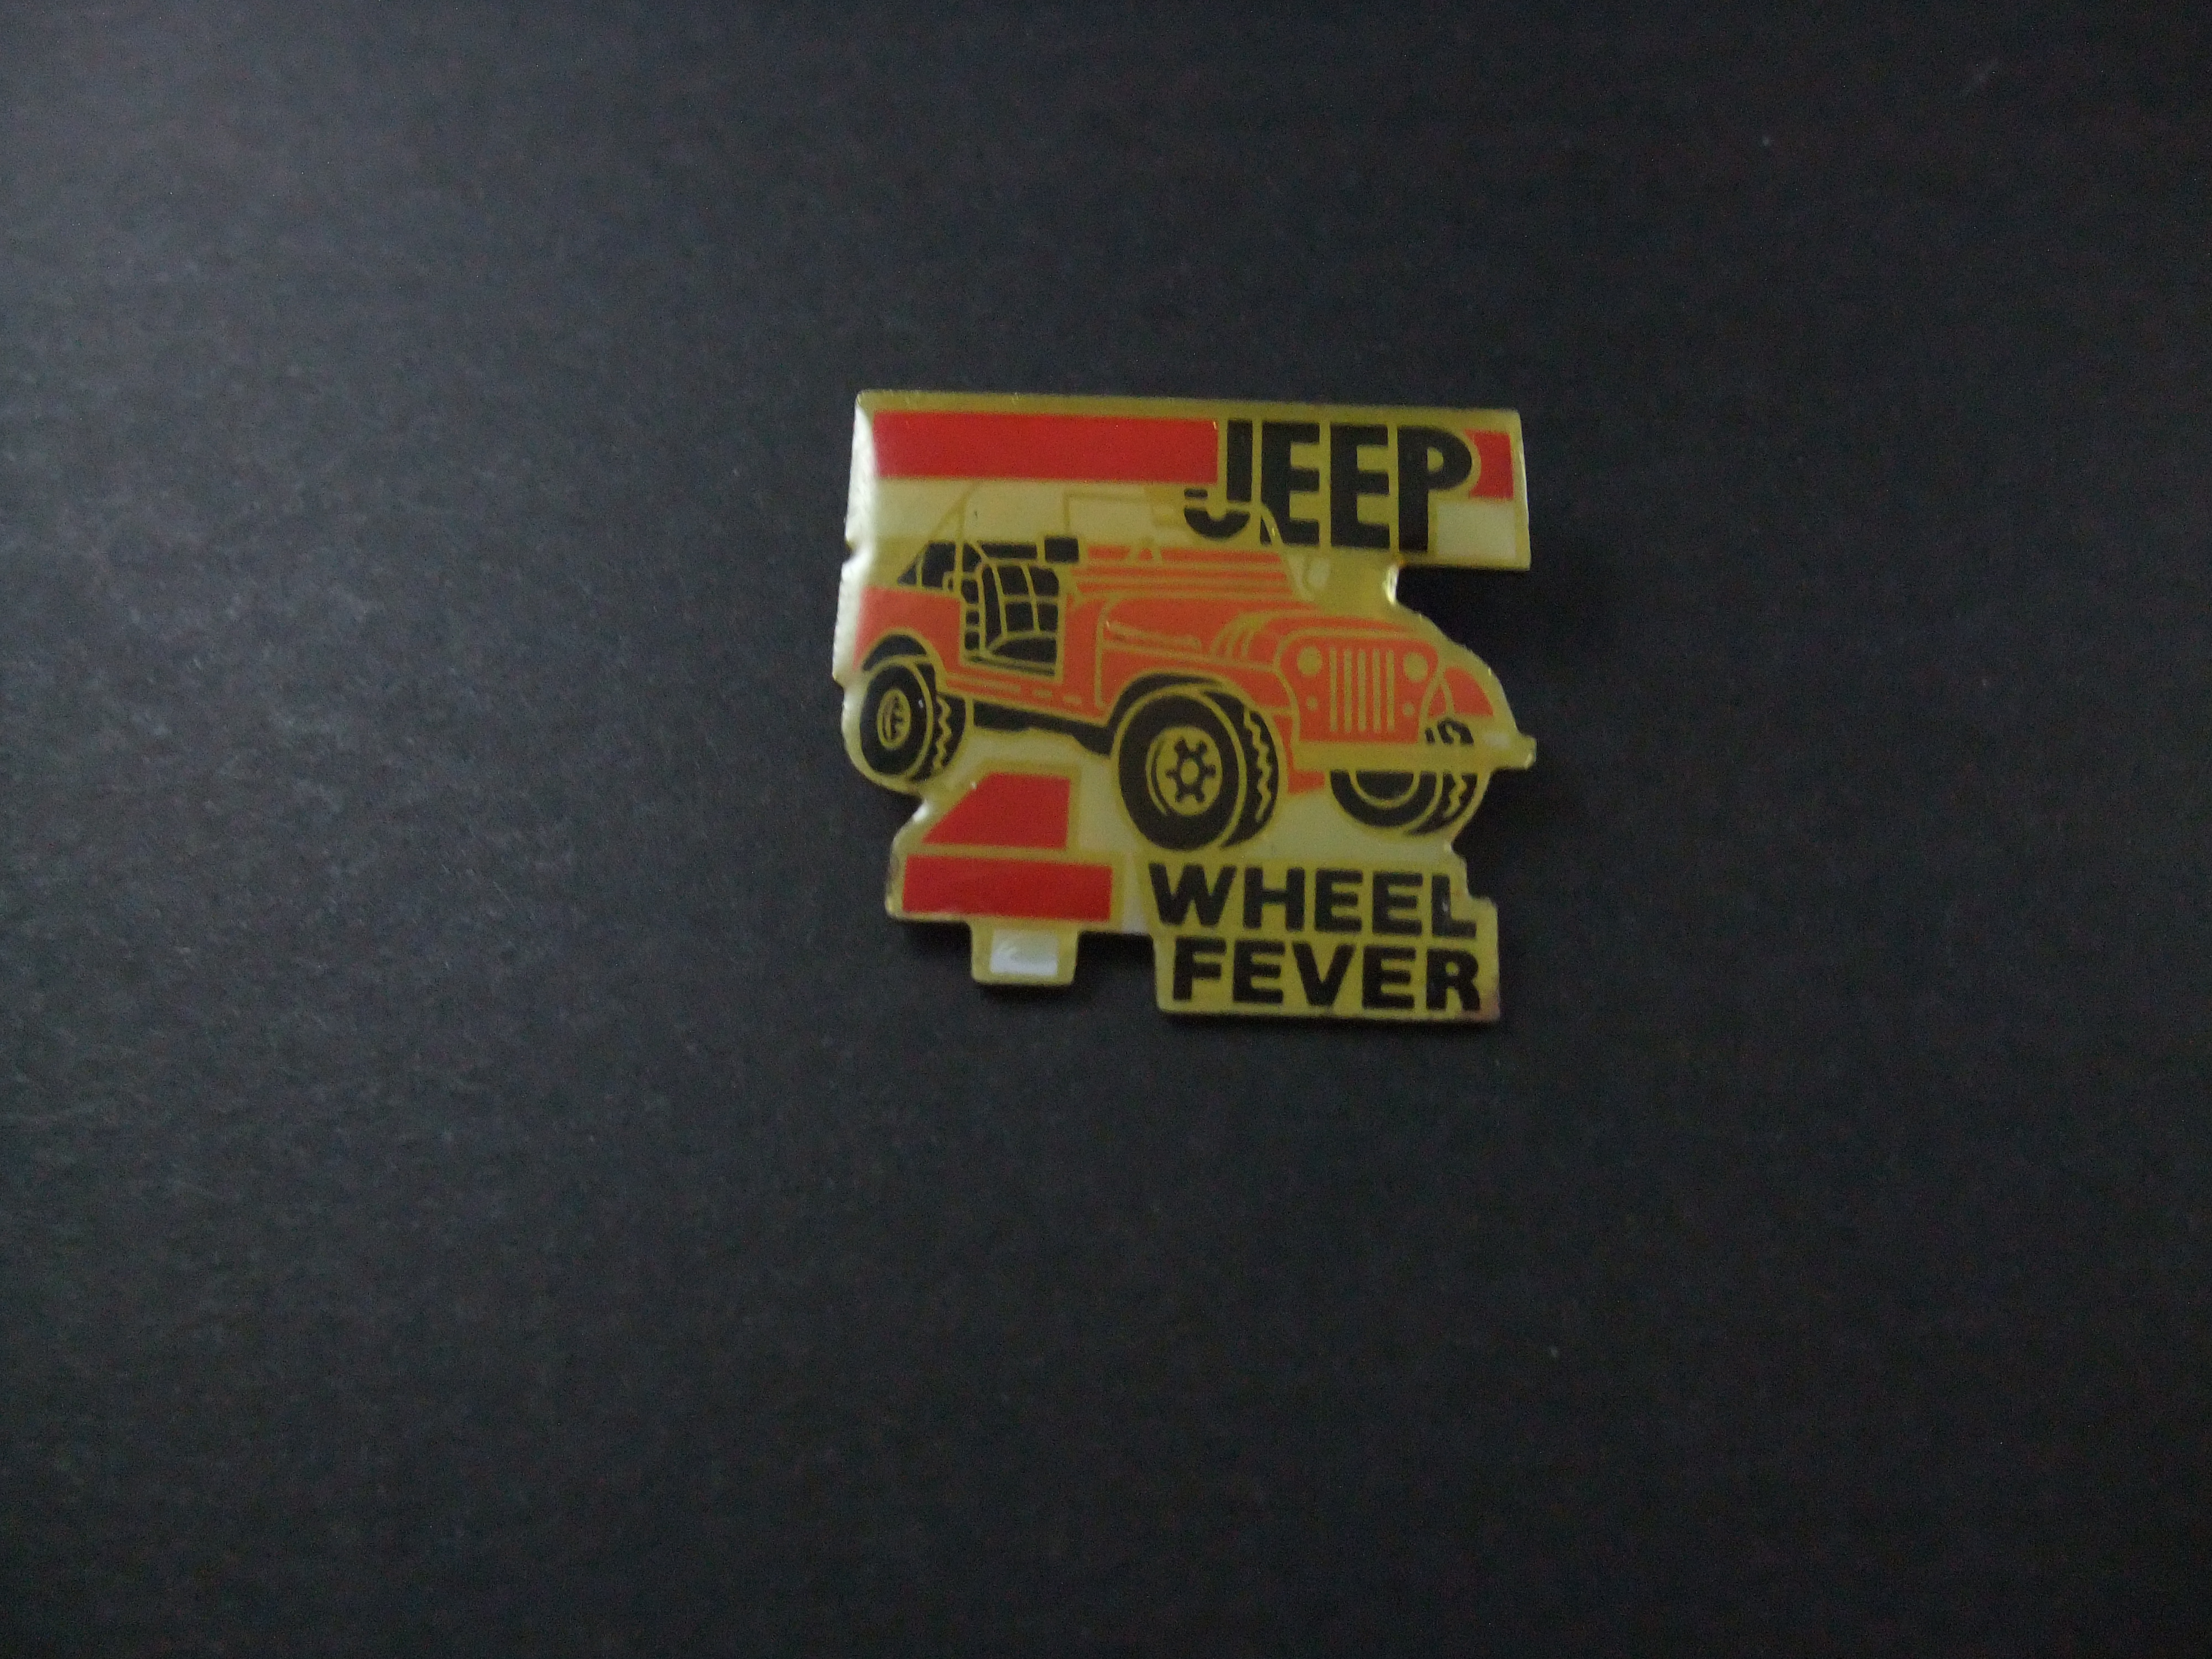 Jeep CJ-7 4 Wheel Fever terreinwagen ( off-road) oranje